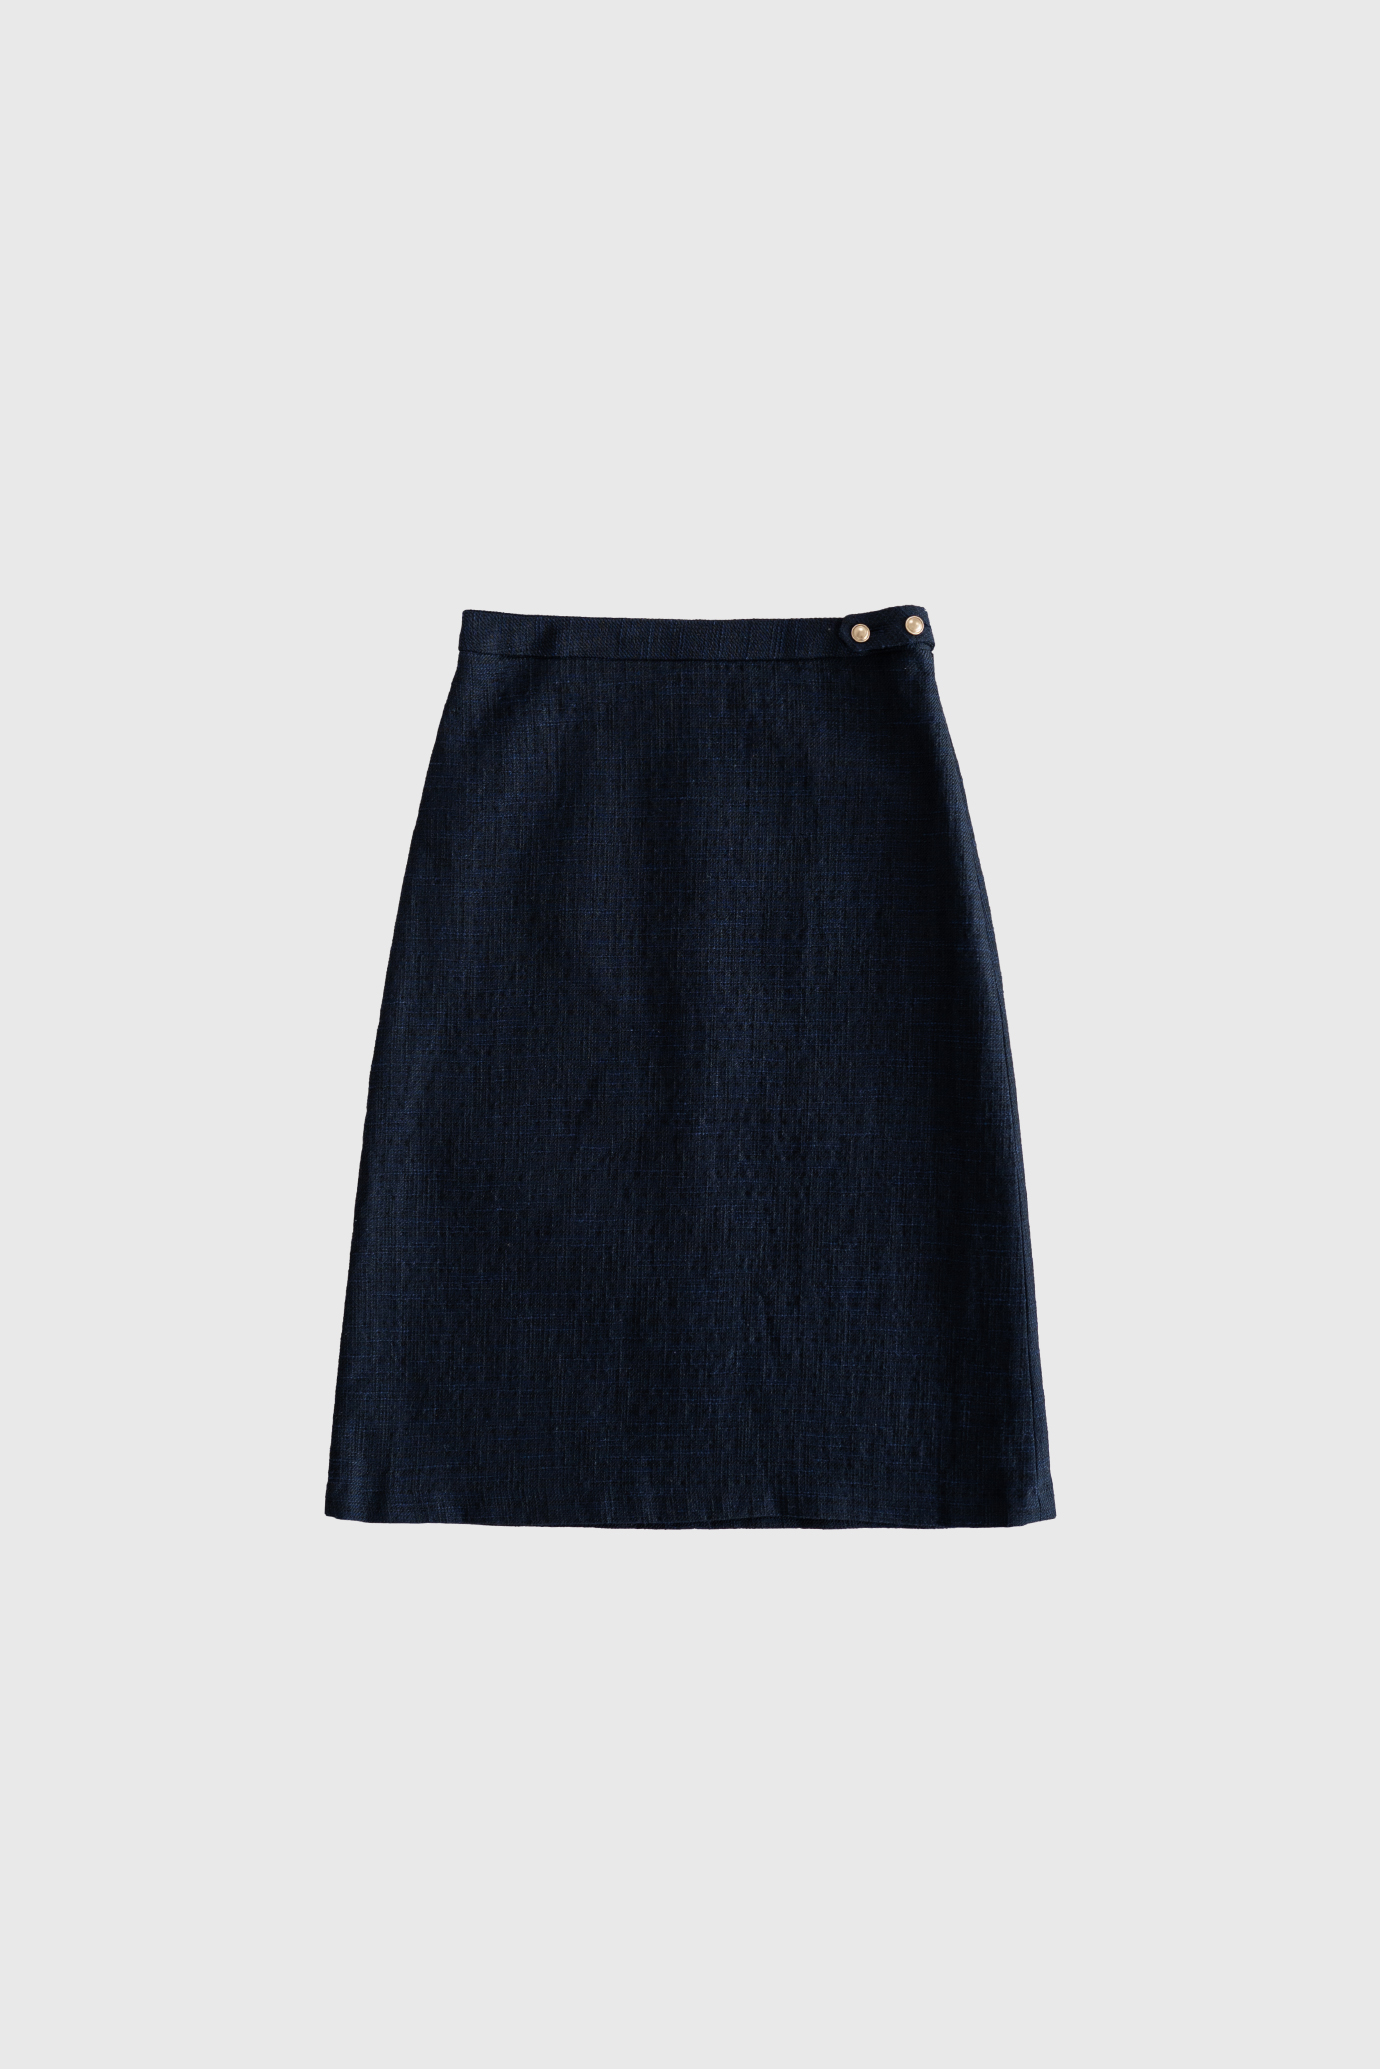 17874_Linen Skirt